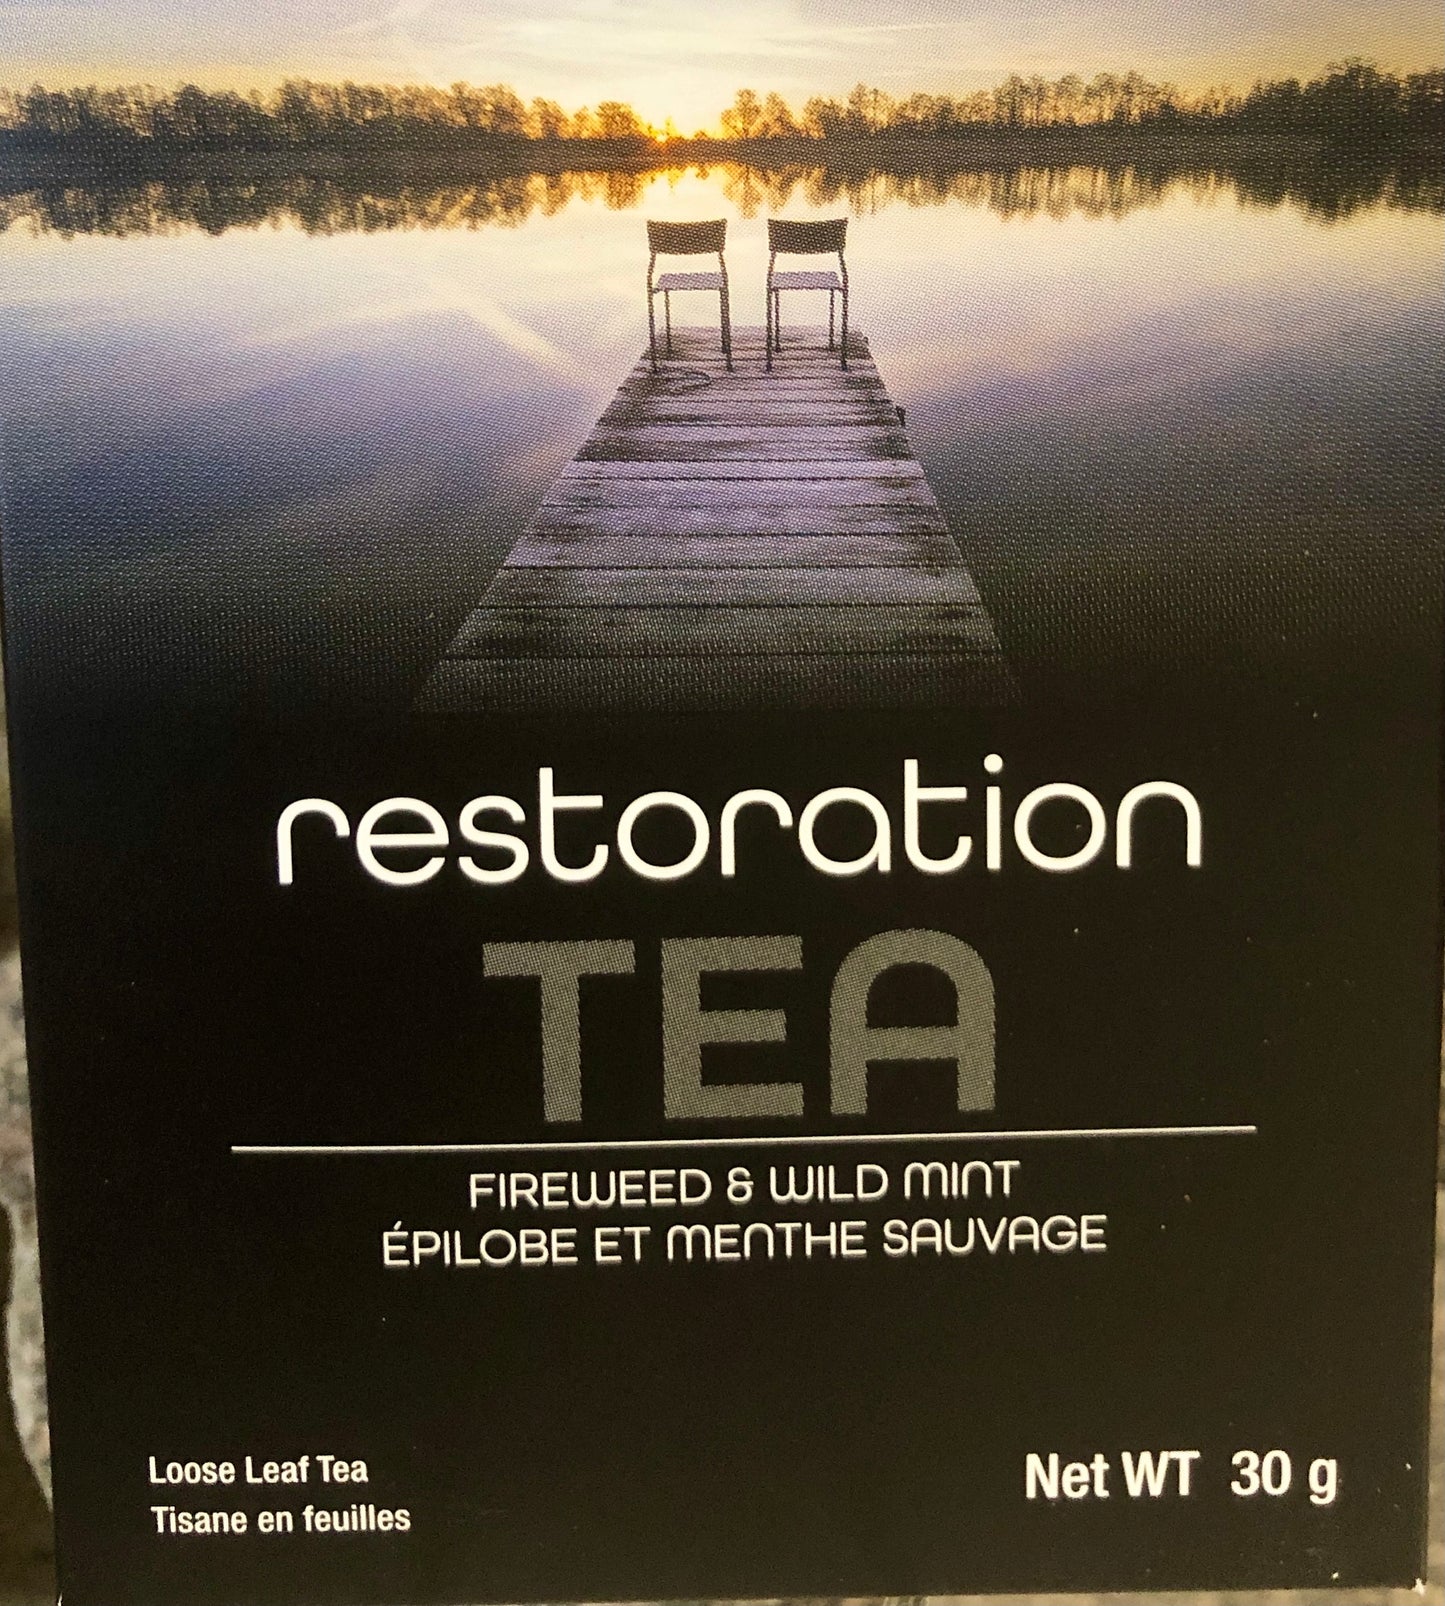 Restoration Tea